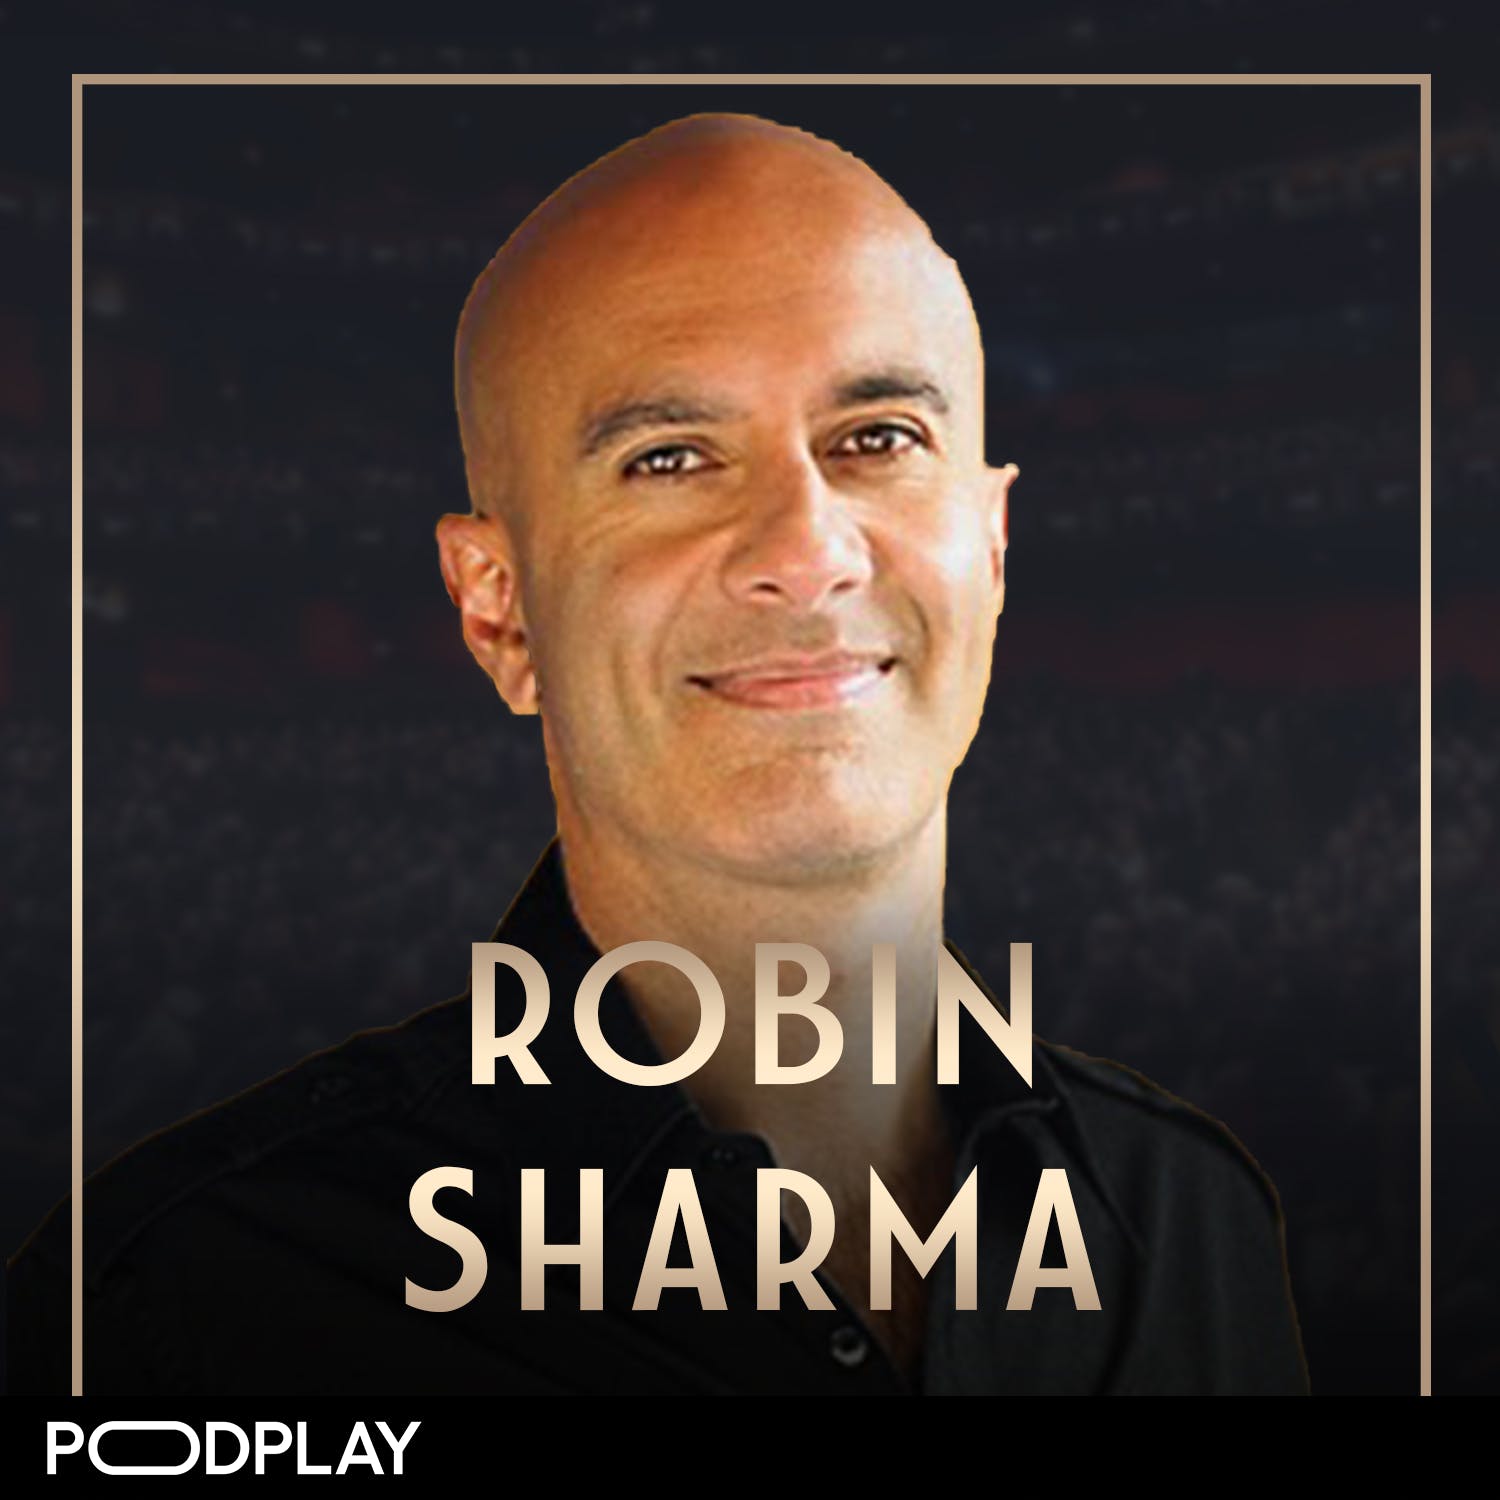 382. Robin Sharma - The Monk Who Sold His Ferrari